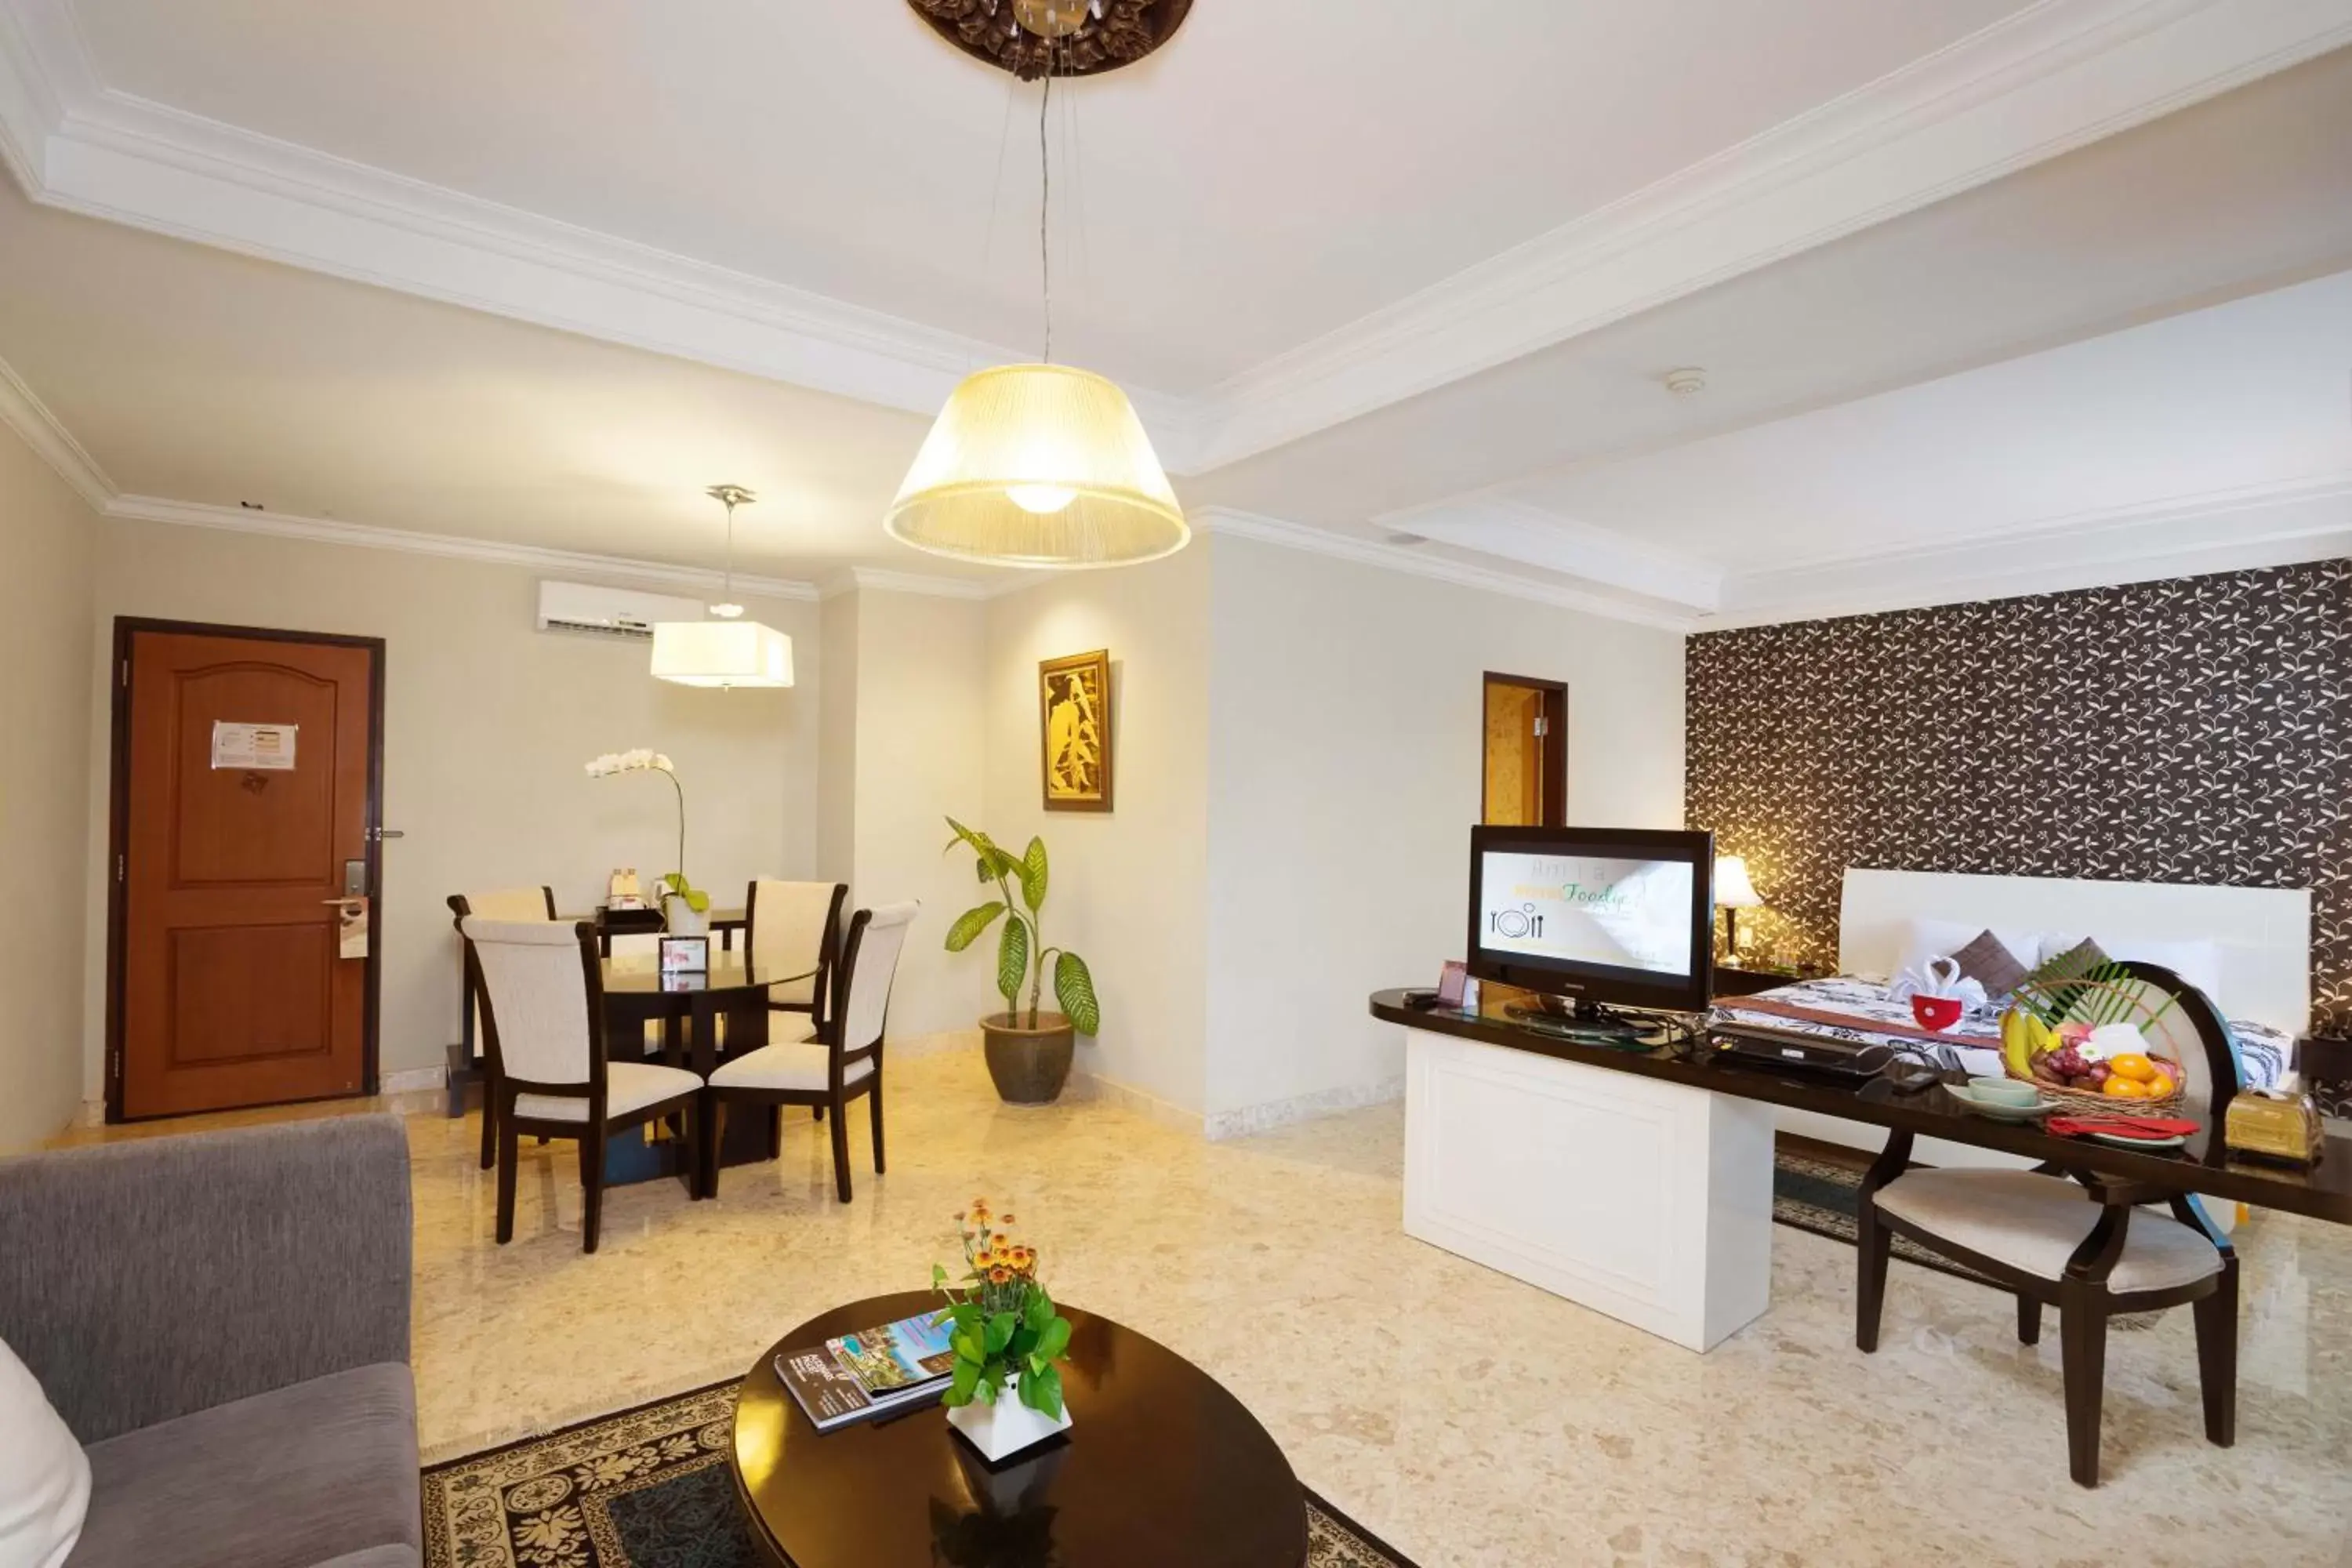 TV and multimedia, Seating Area in Royal Orchids Garden Hotel & Condominium